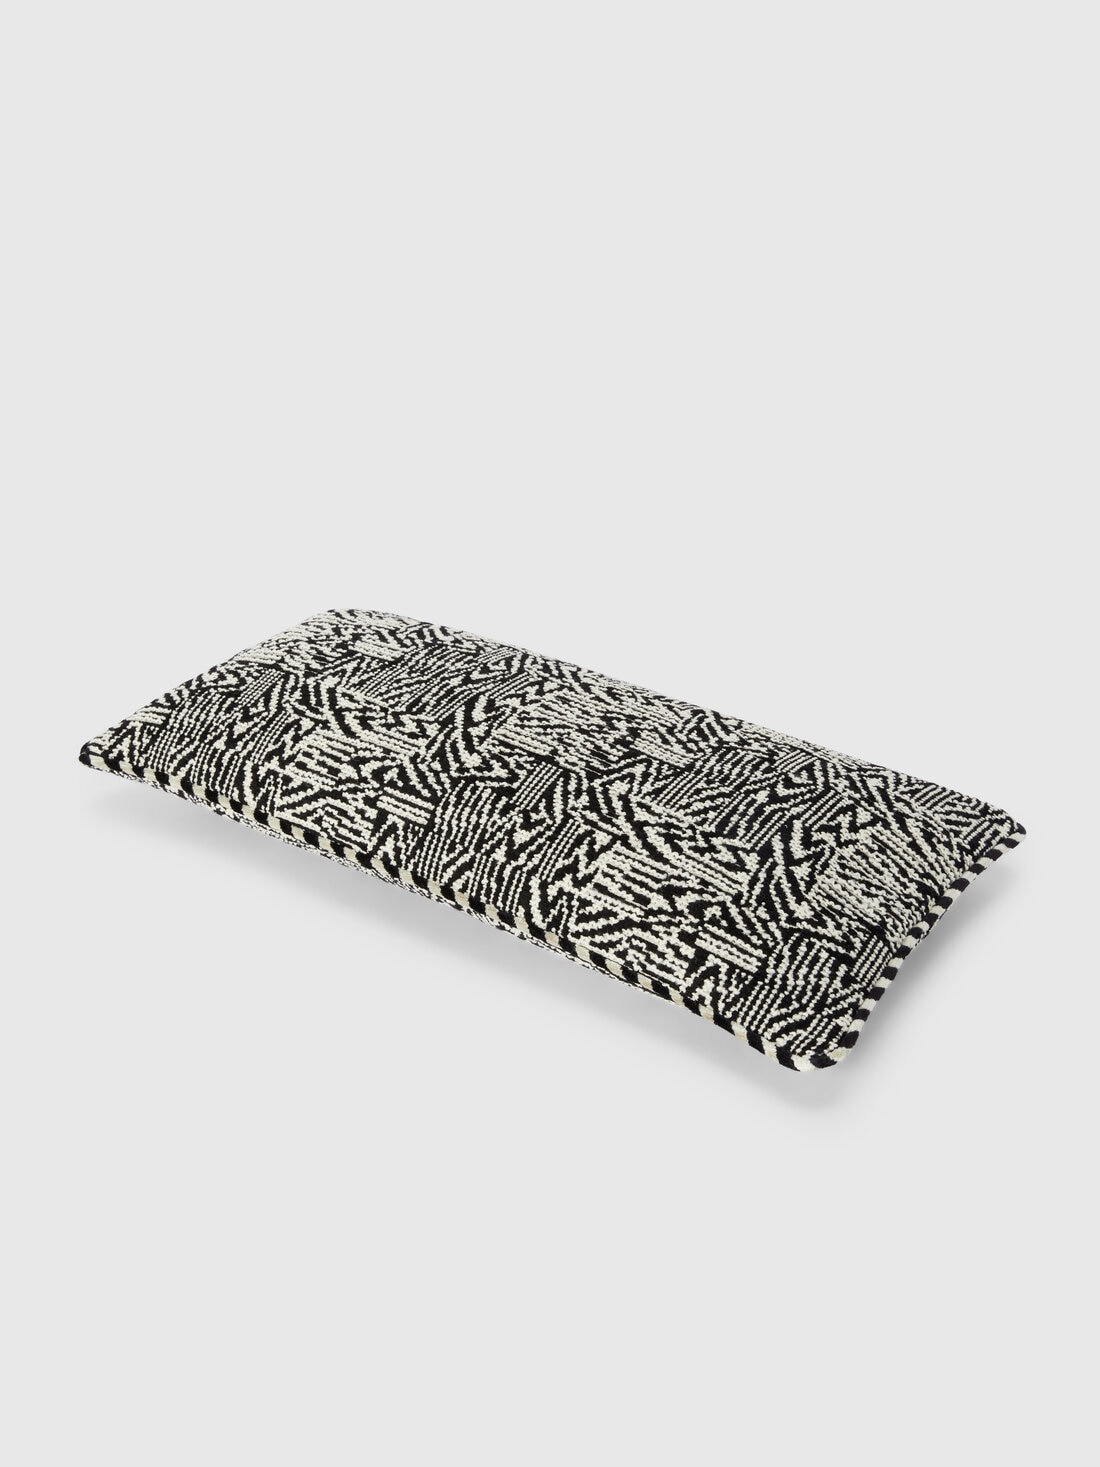 Noise 30x60 cm cushion with bouclé work, Black & White - 8051575837784 - 1